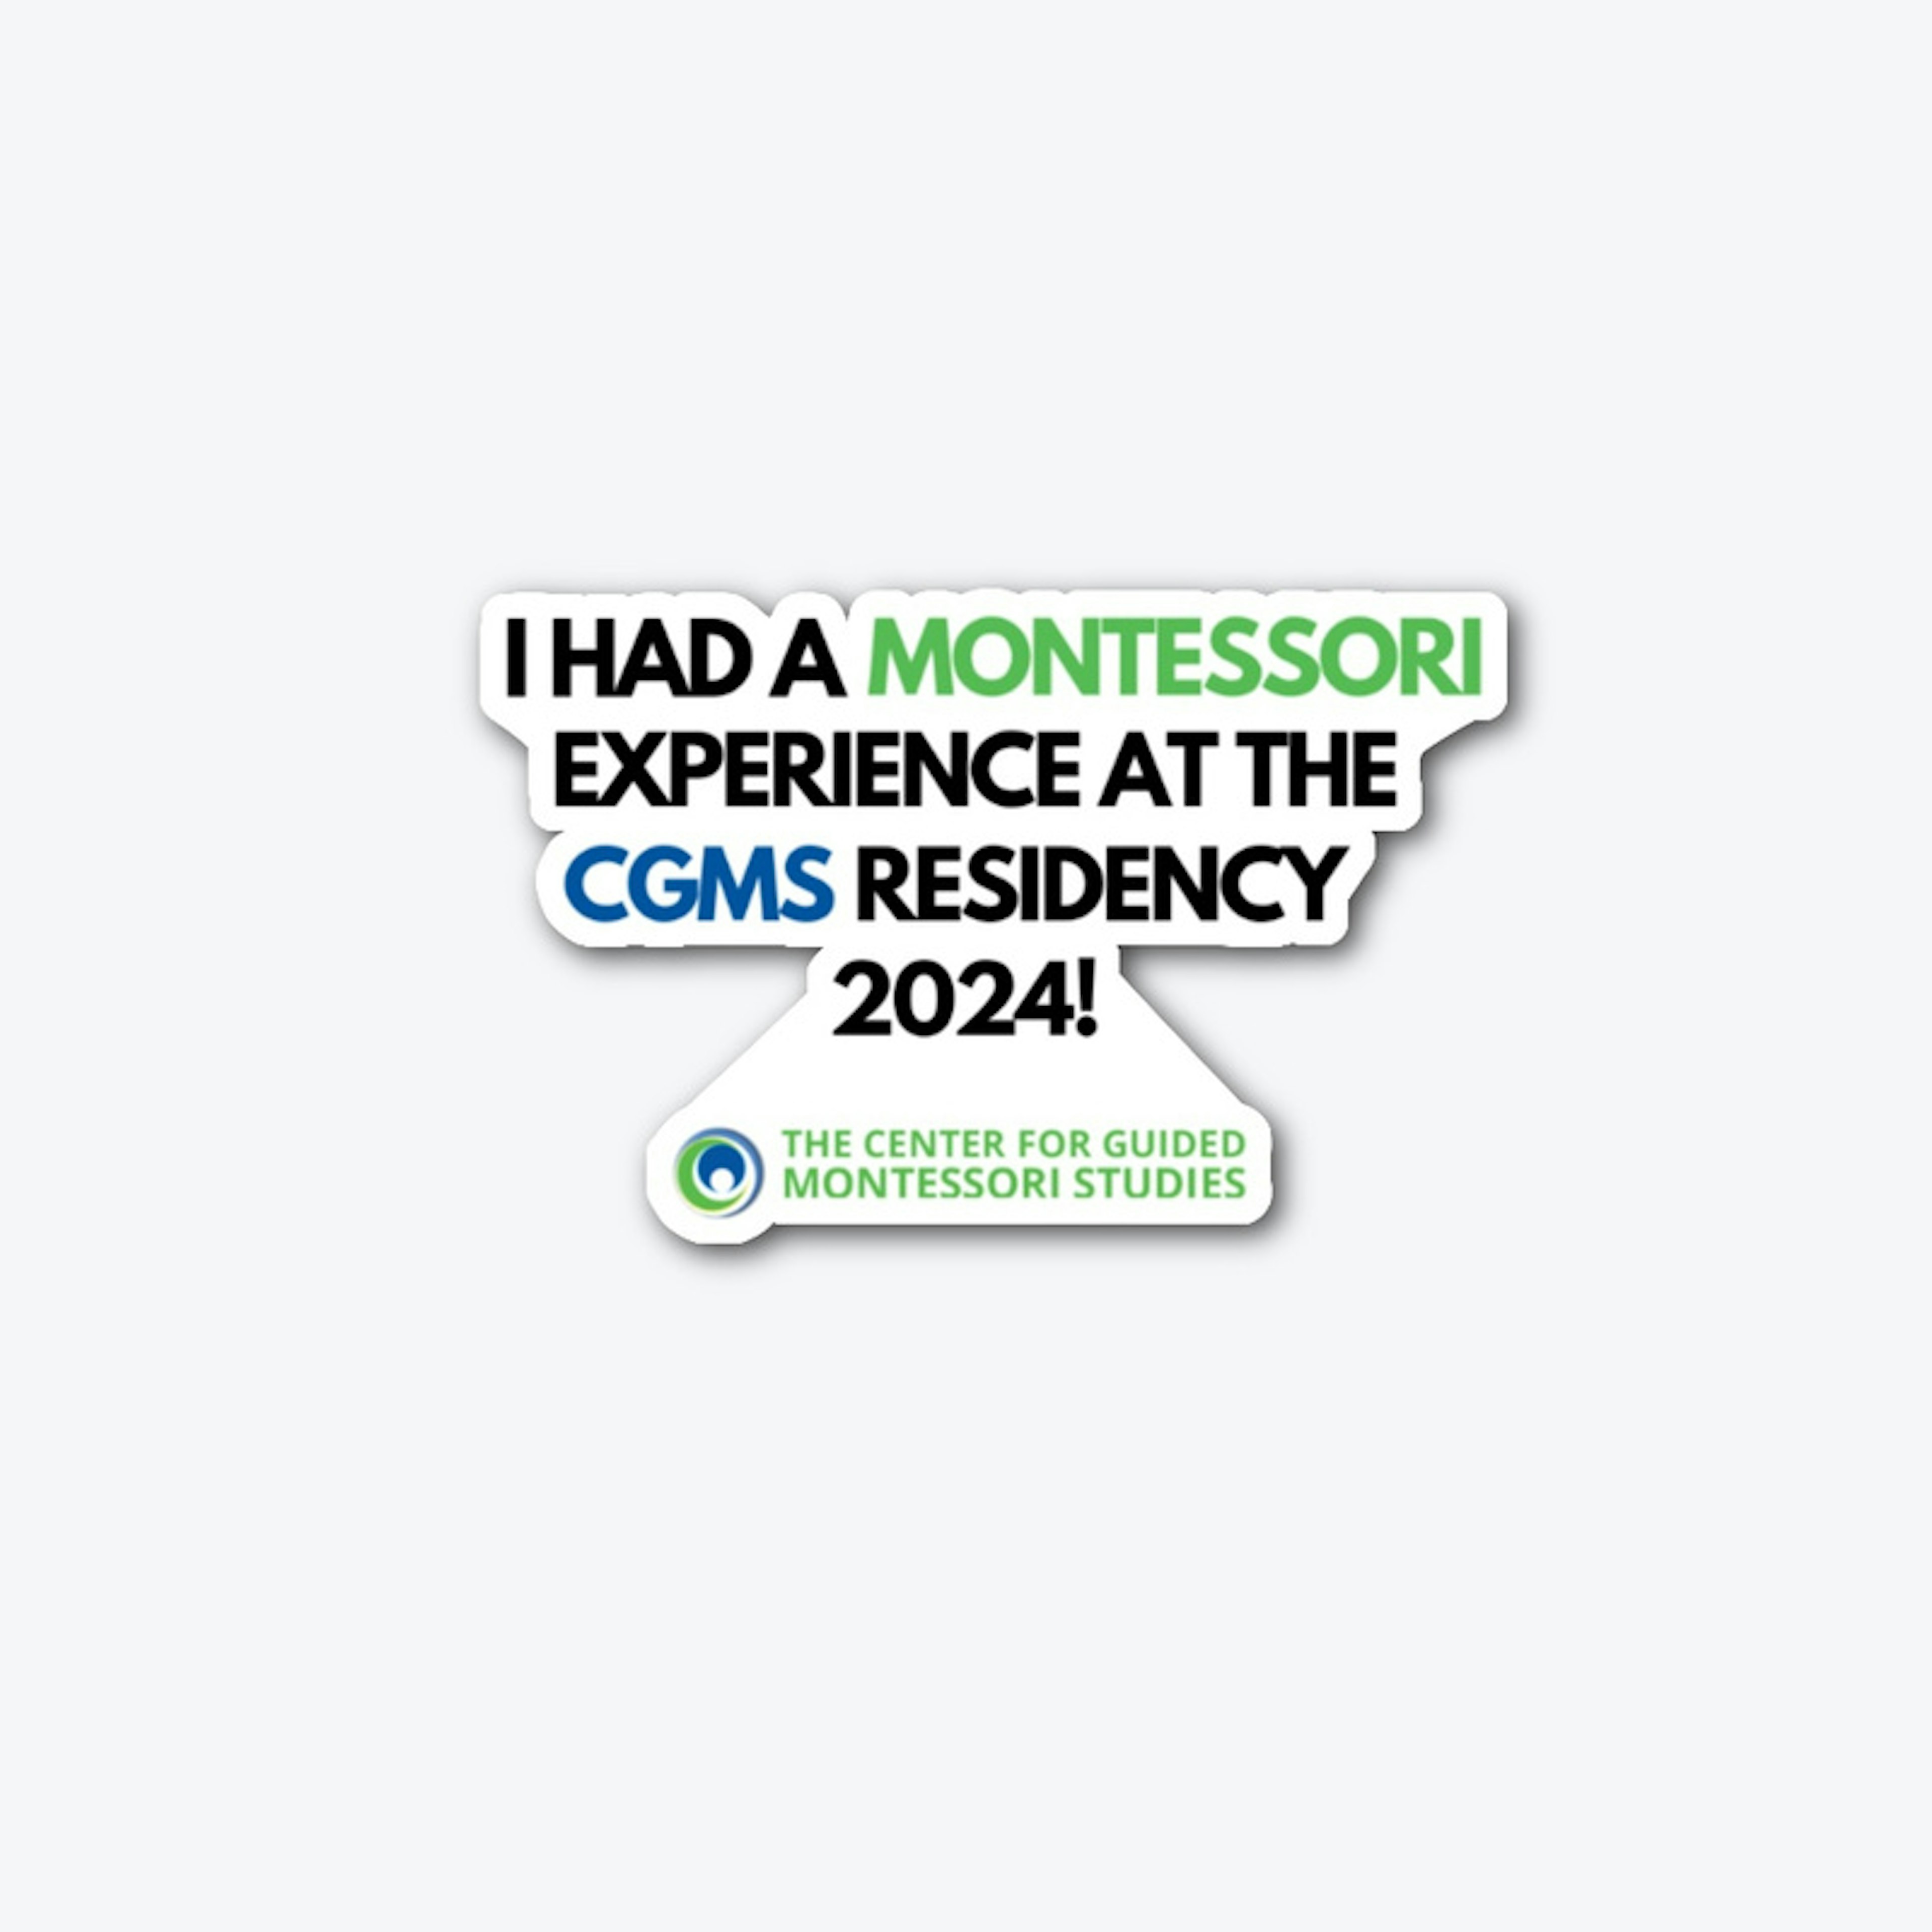 CGMS Residency  2024 - My Experience